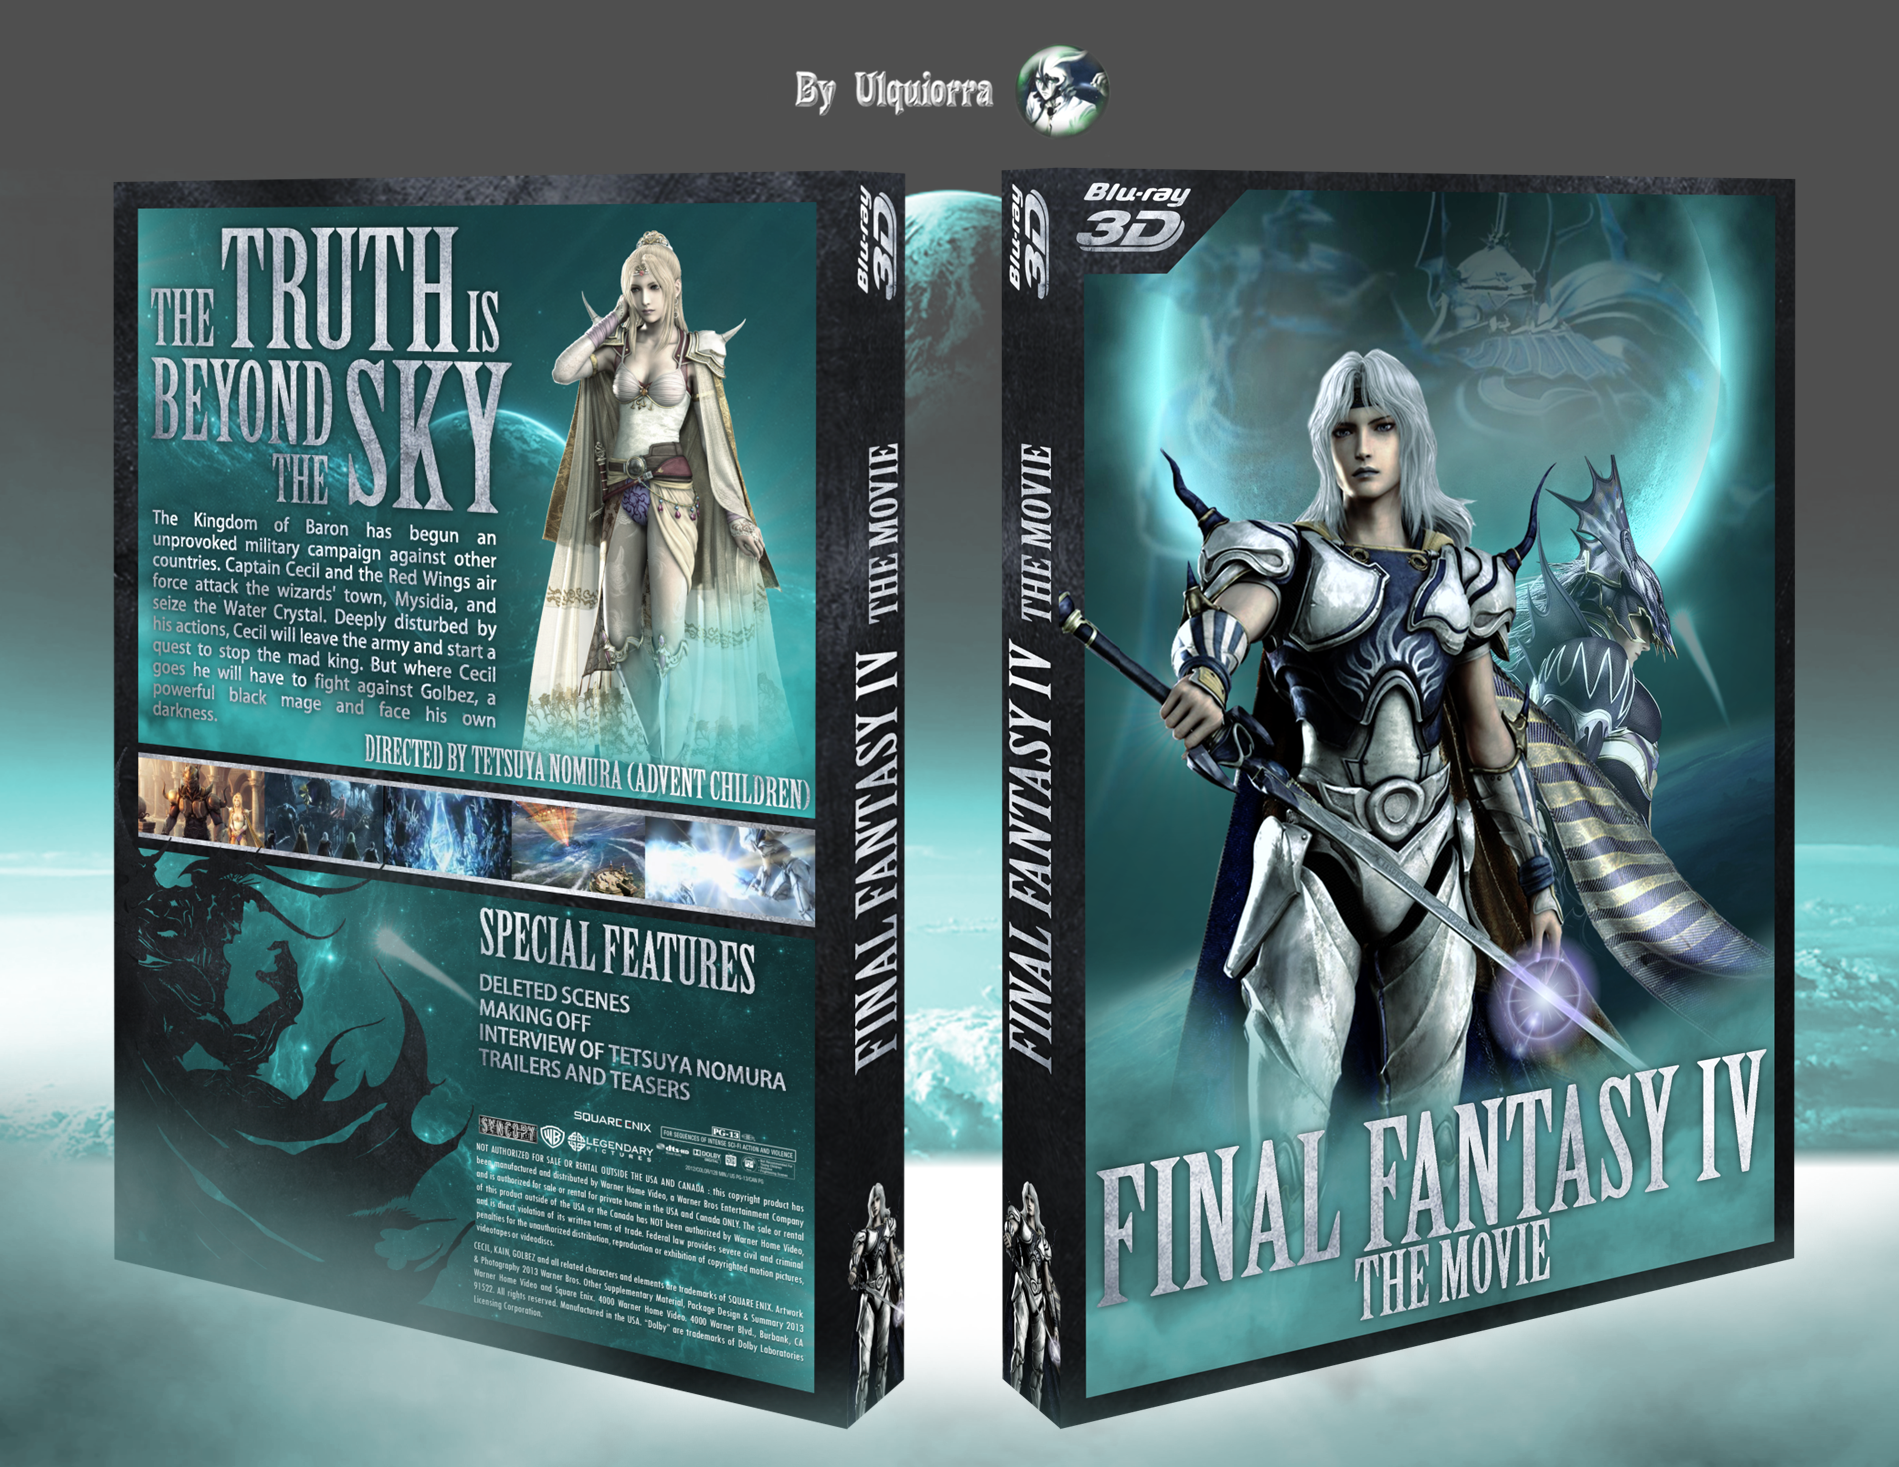 Final Fantasy IV: the movie box cover